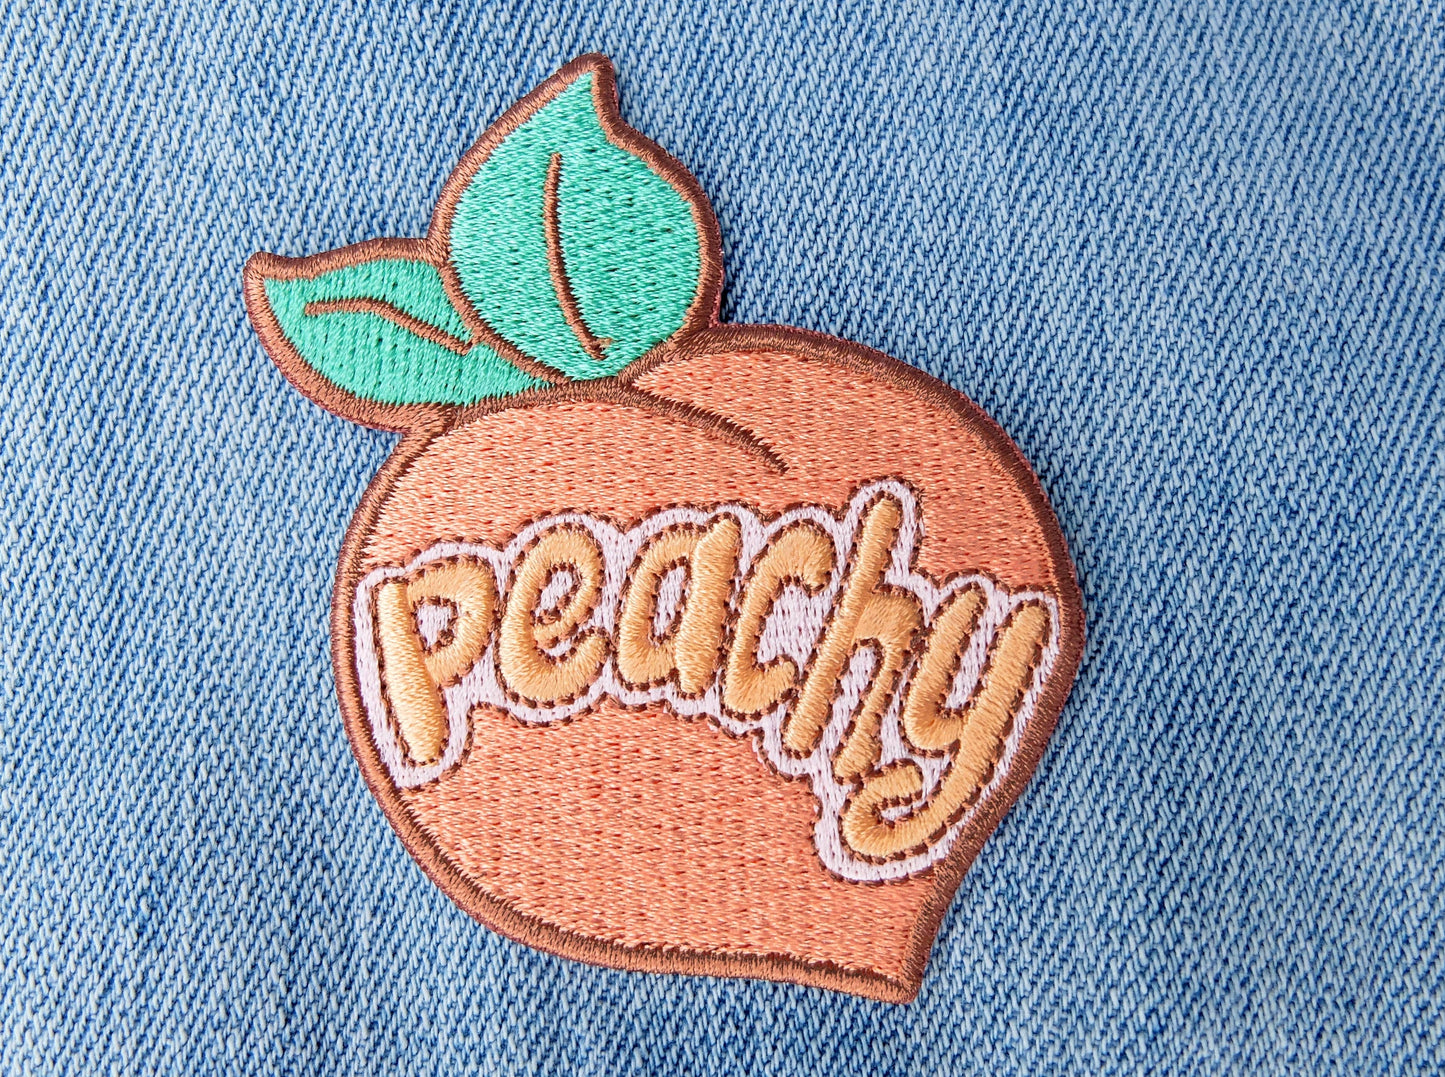 Peachy Patch